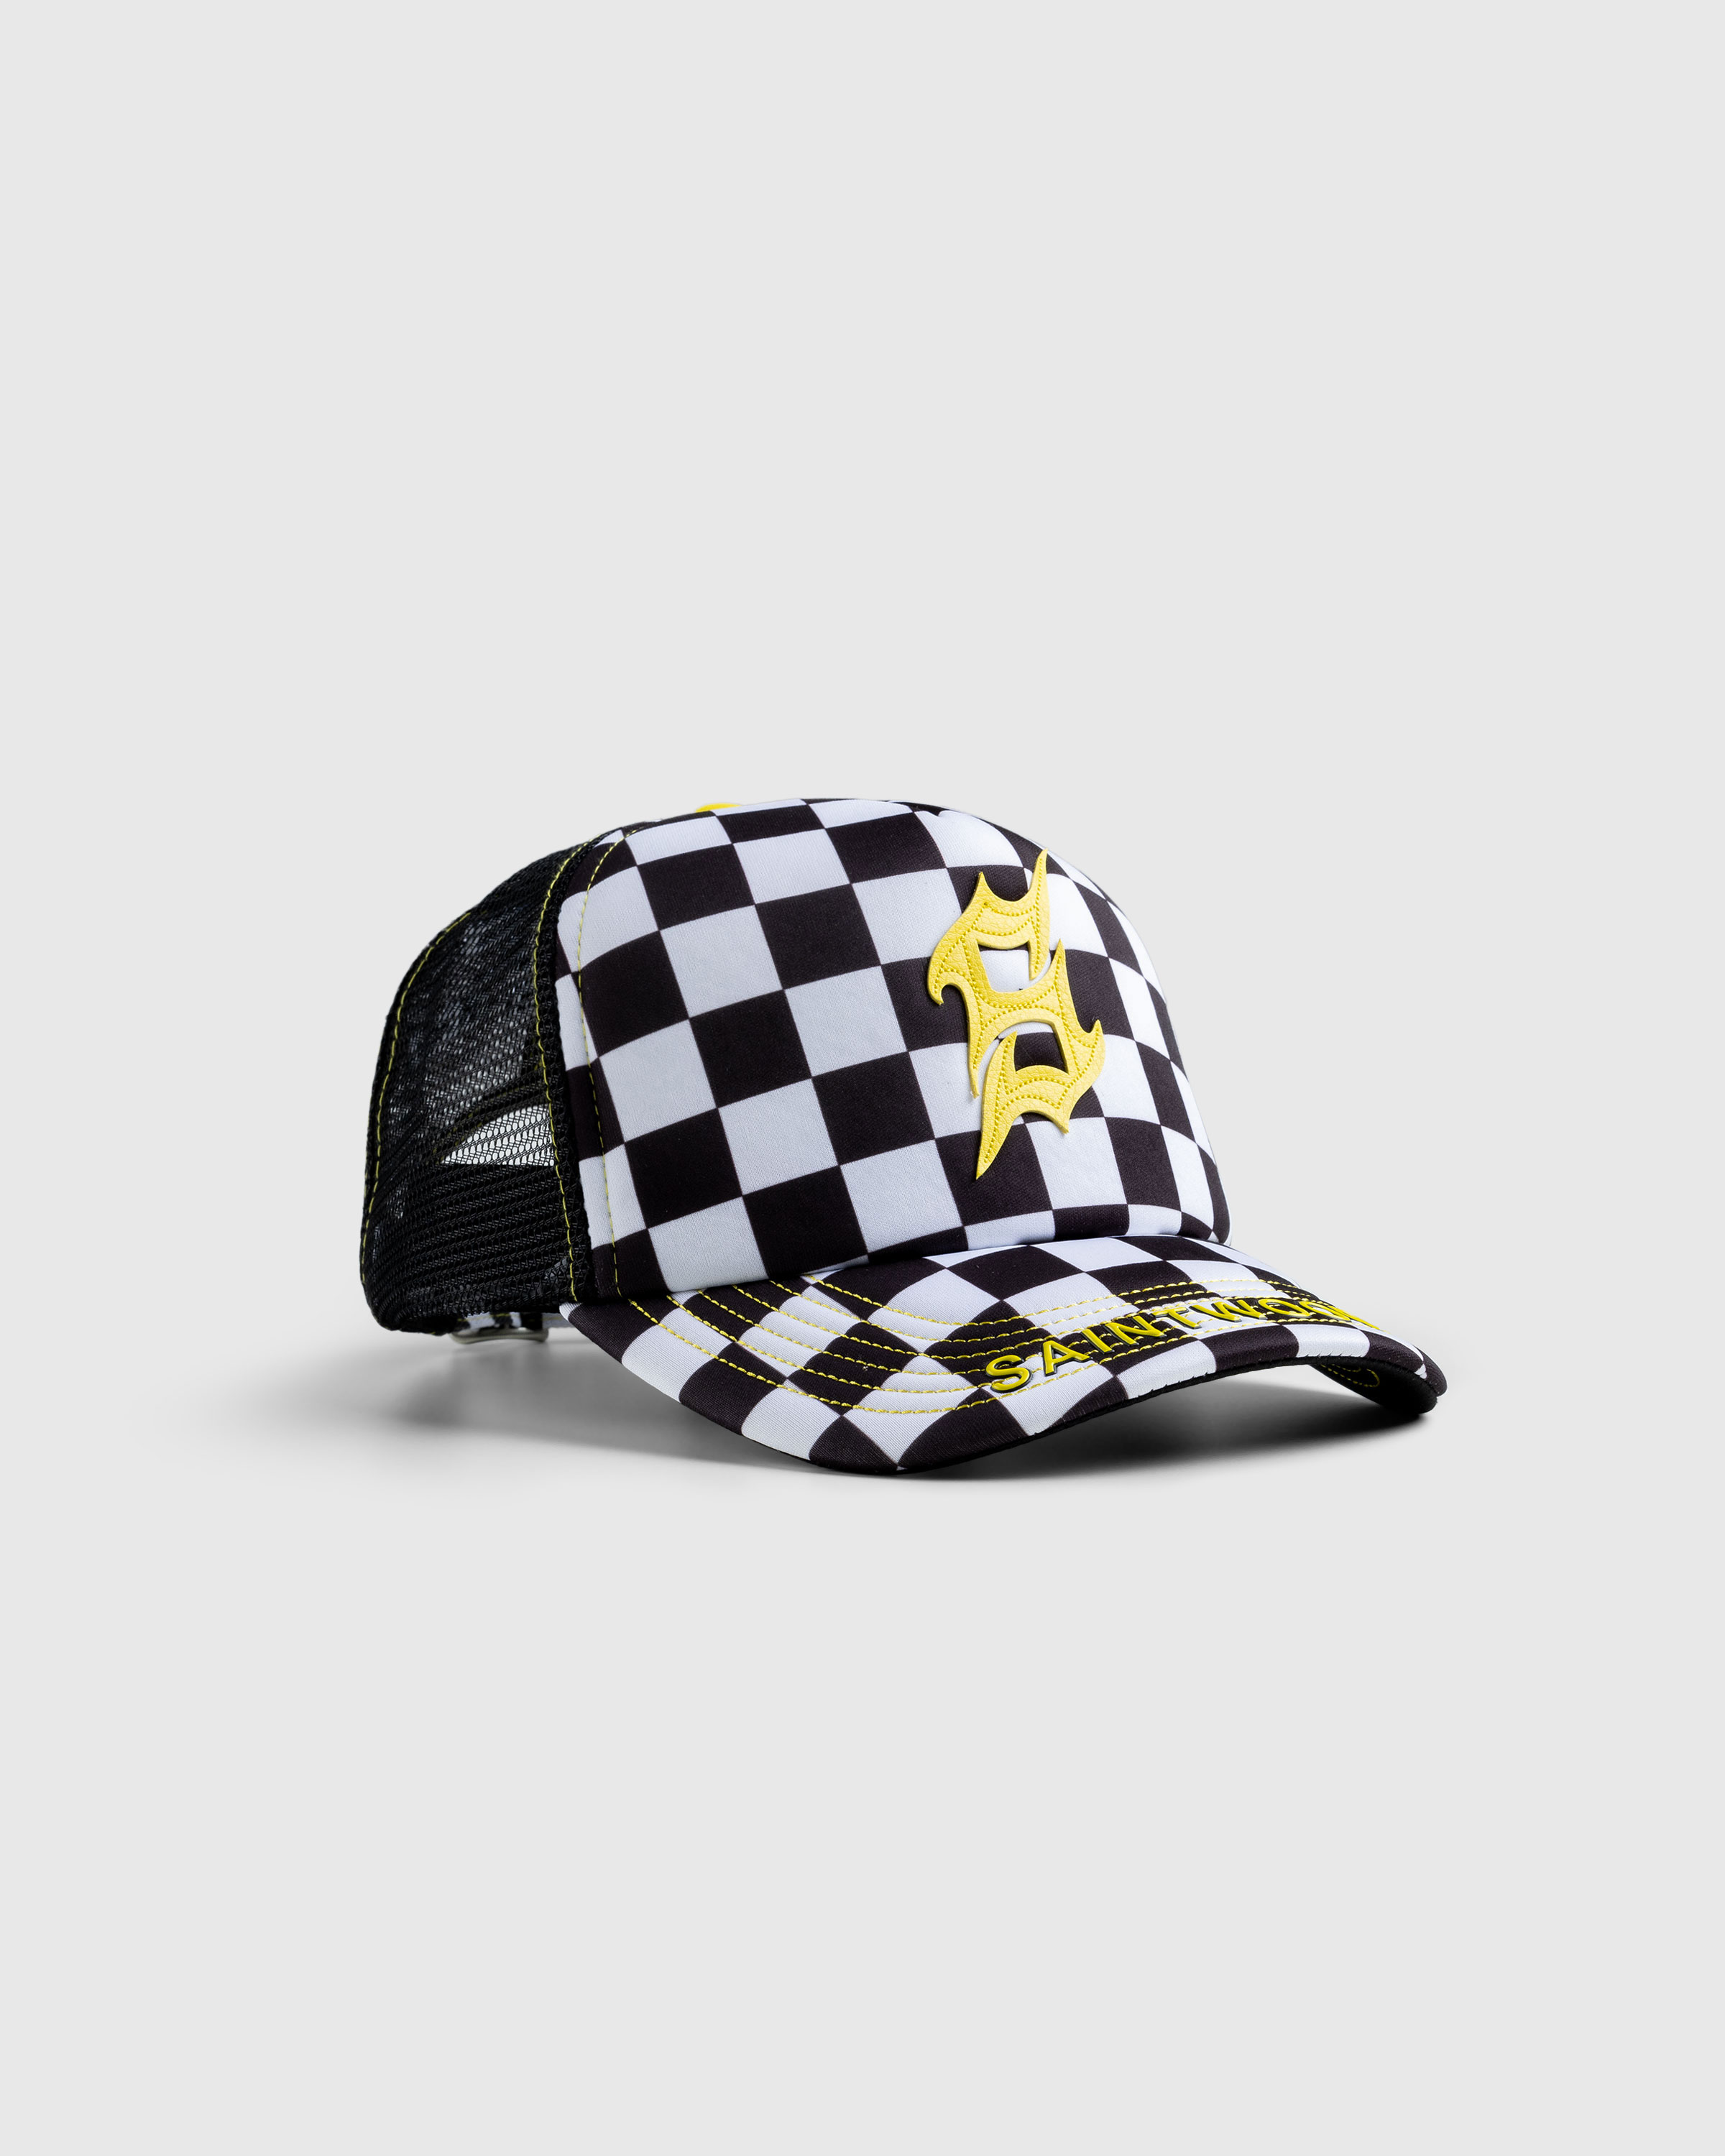 Saintwoods - SW Checkered Hat Black - Accessories - Black - Image 1